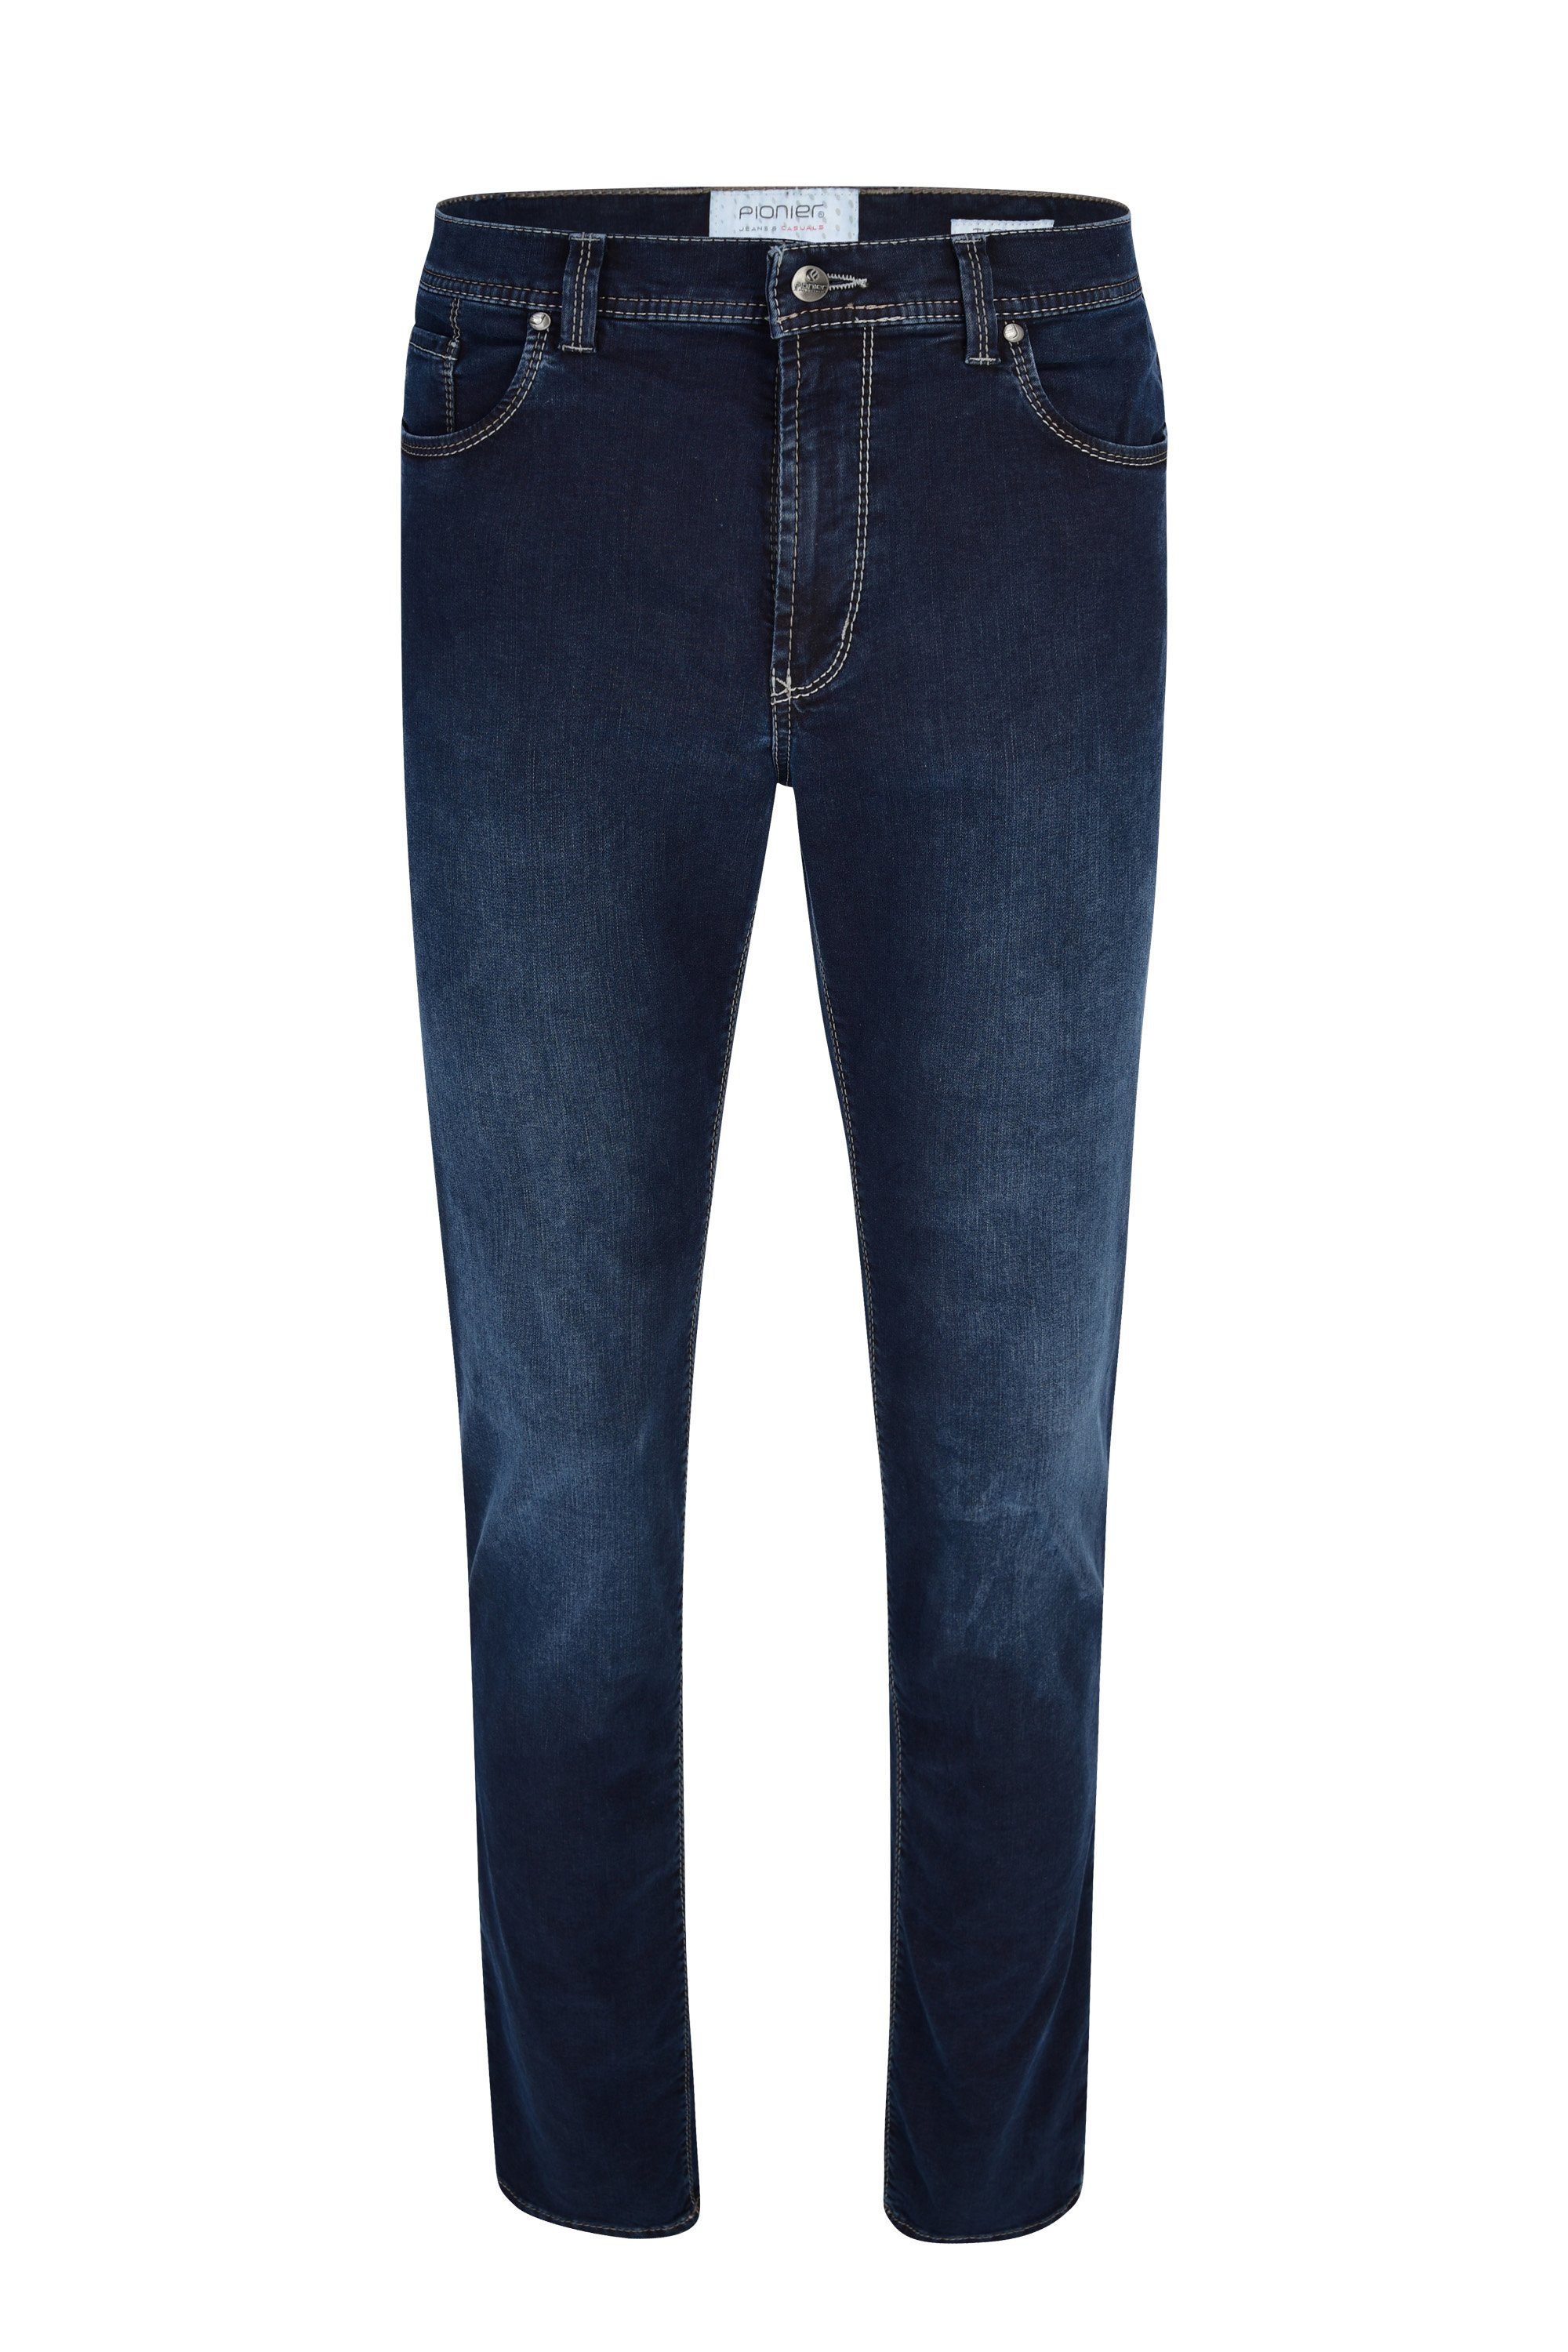 2079 5-Pocket-Jeans dark 6101.665 PIONIER THOMAS blue Pionier